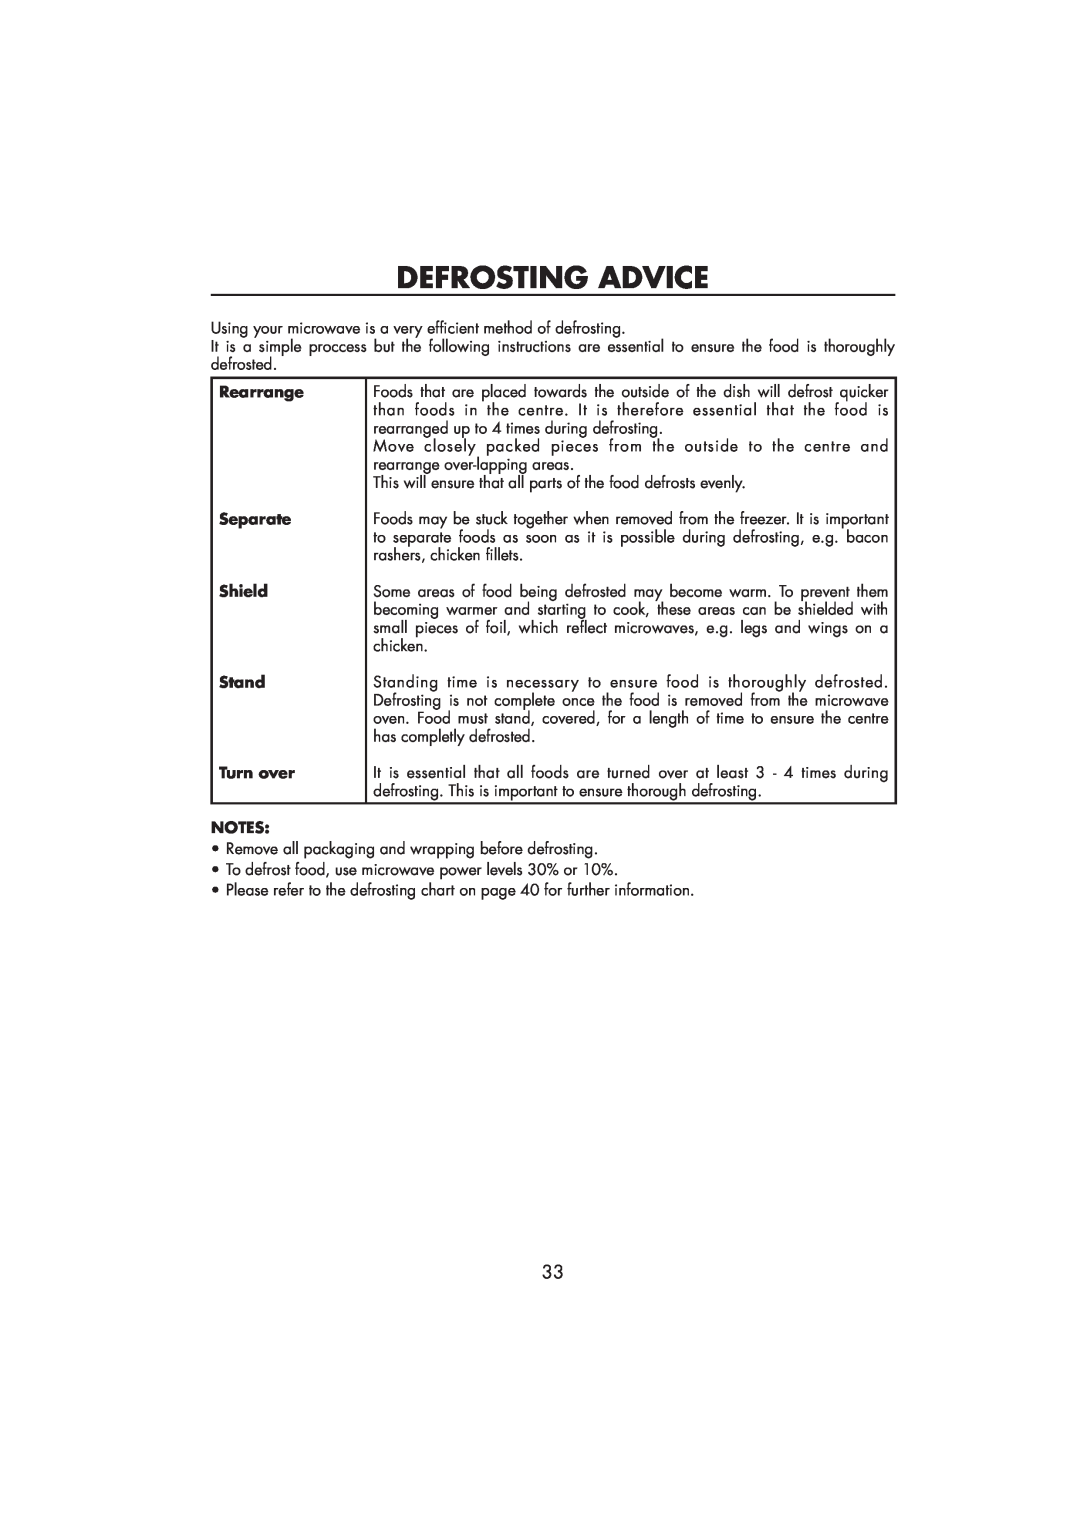 Sharp R-890SLM operation manual Defrosting Advice, Rearrange, Separate, Shield, Stand, Turn over 